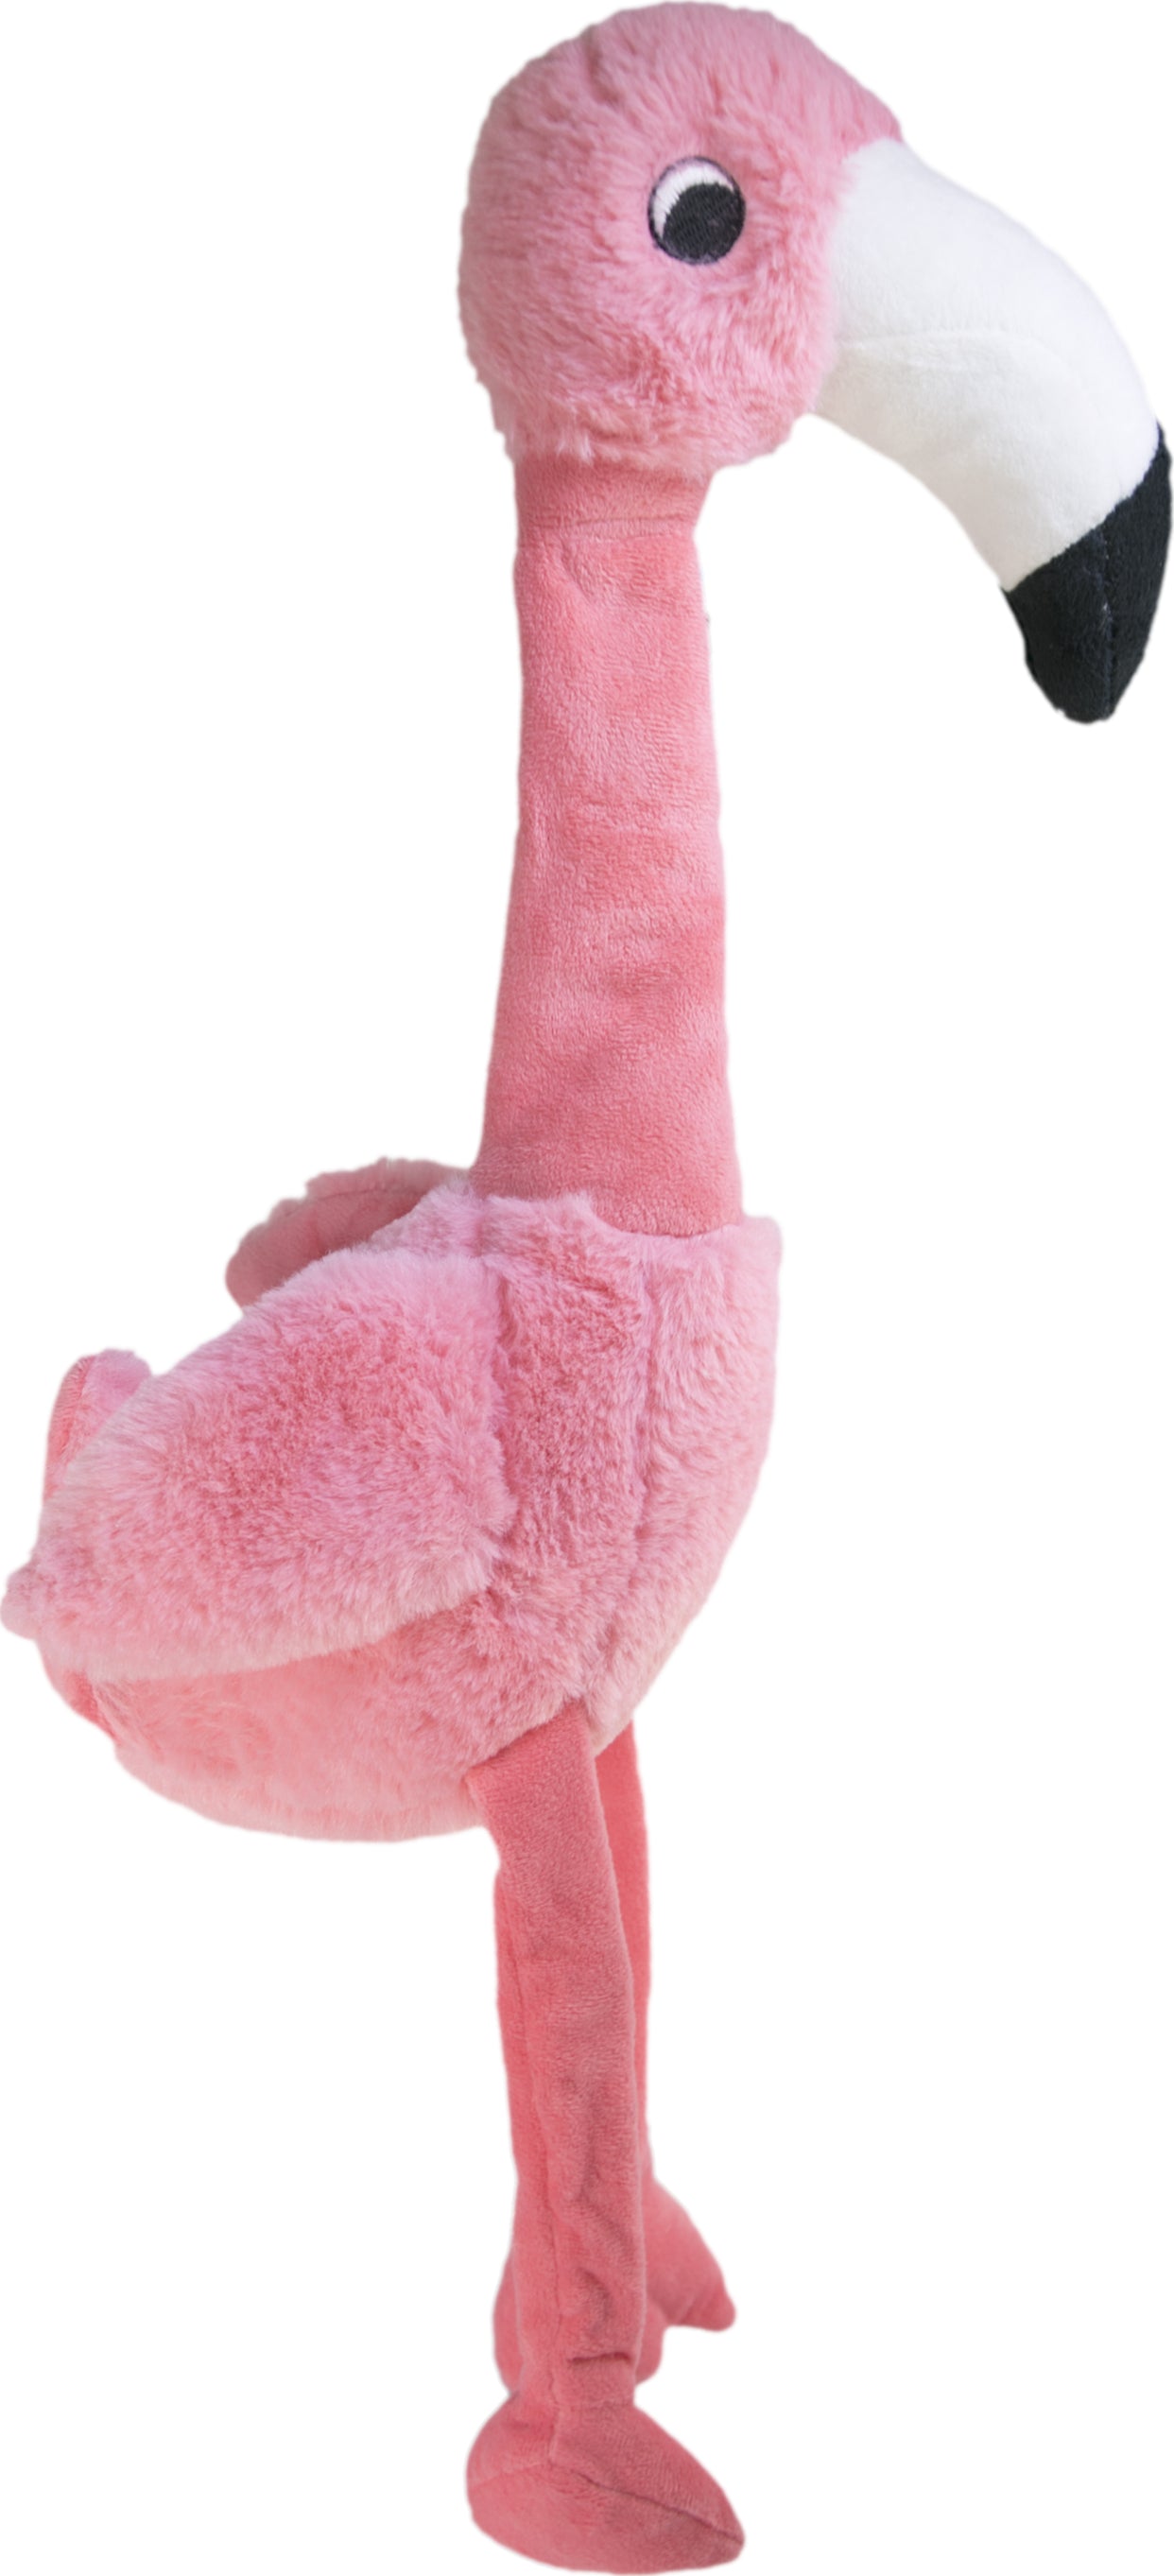 Kong Knuffel shakers flamingo - Huisdierplezier